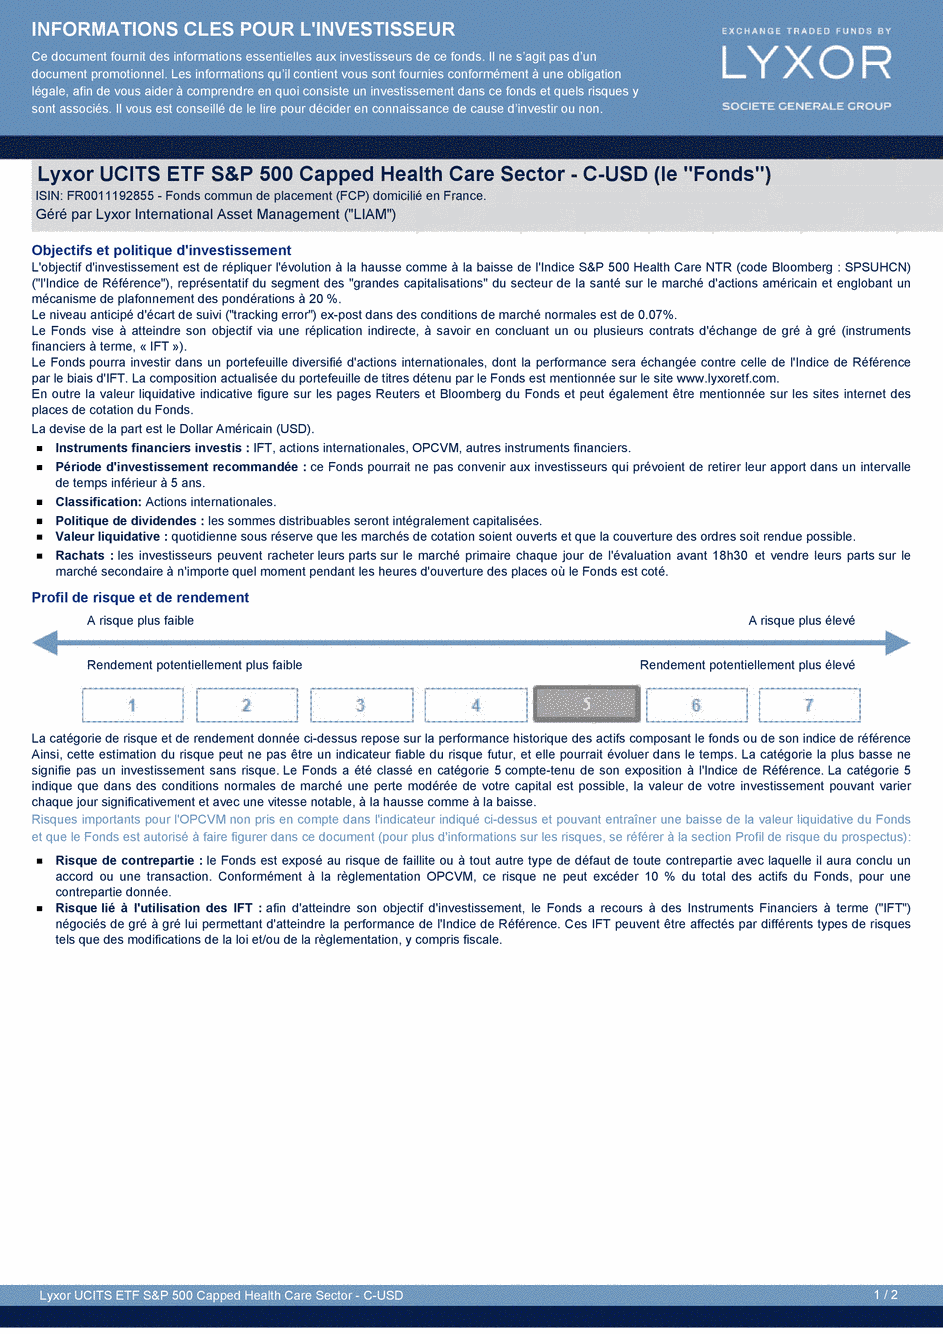 DICI LYXOR UCITS ETF S&P 500 CAPPED HEALTH CARE SECTOR PART C-USD - 11/02/2015 - Français